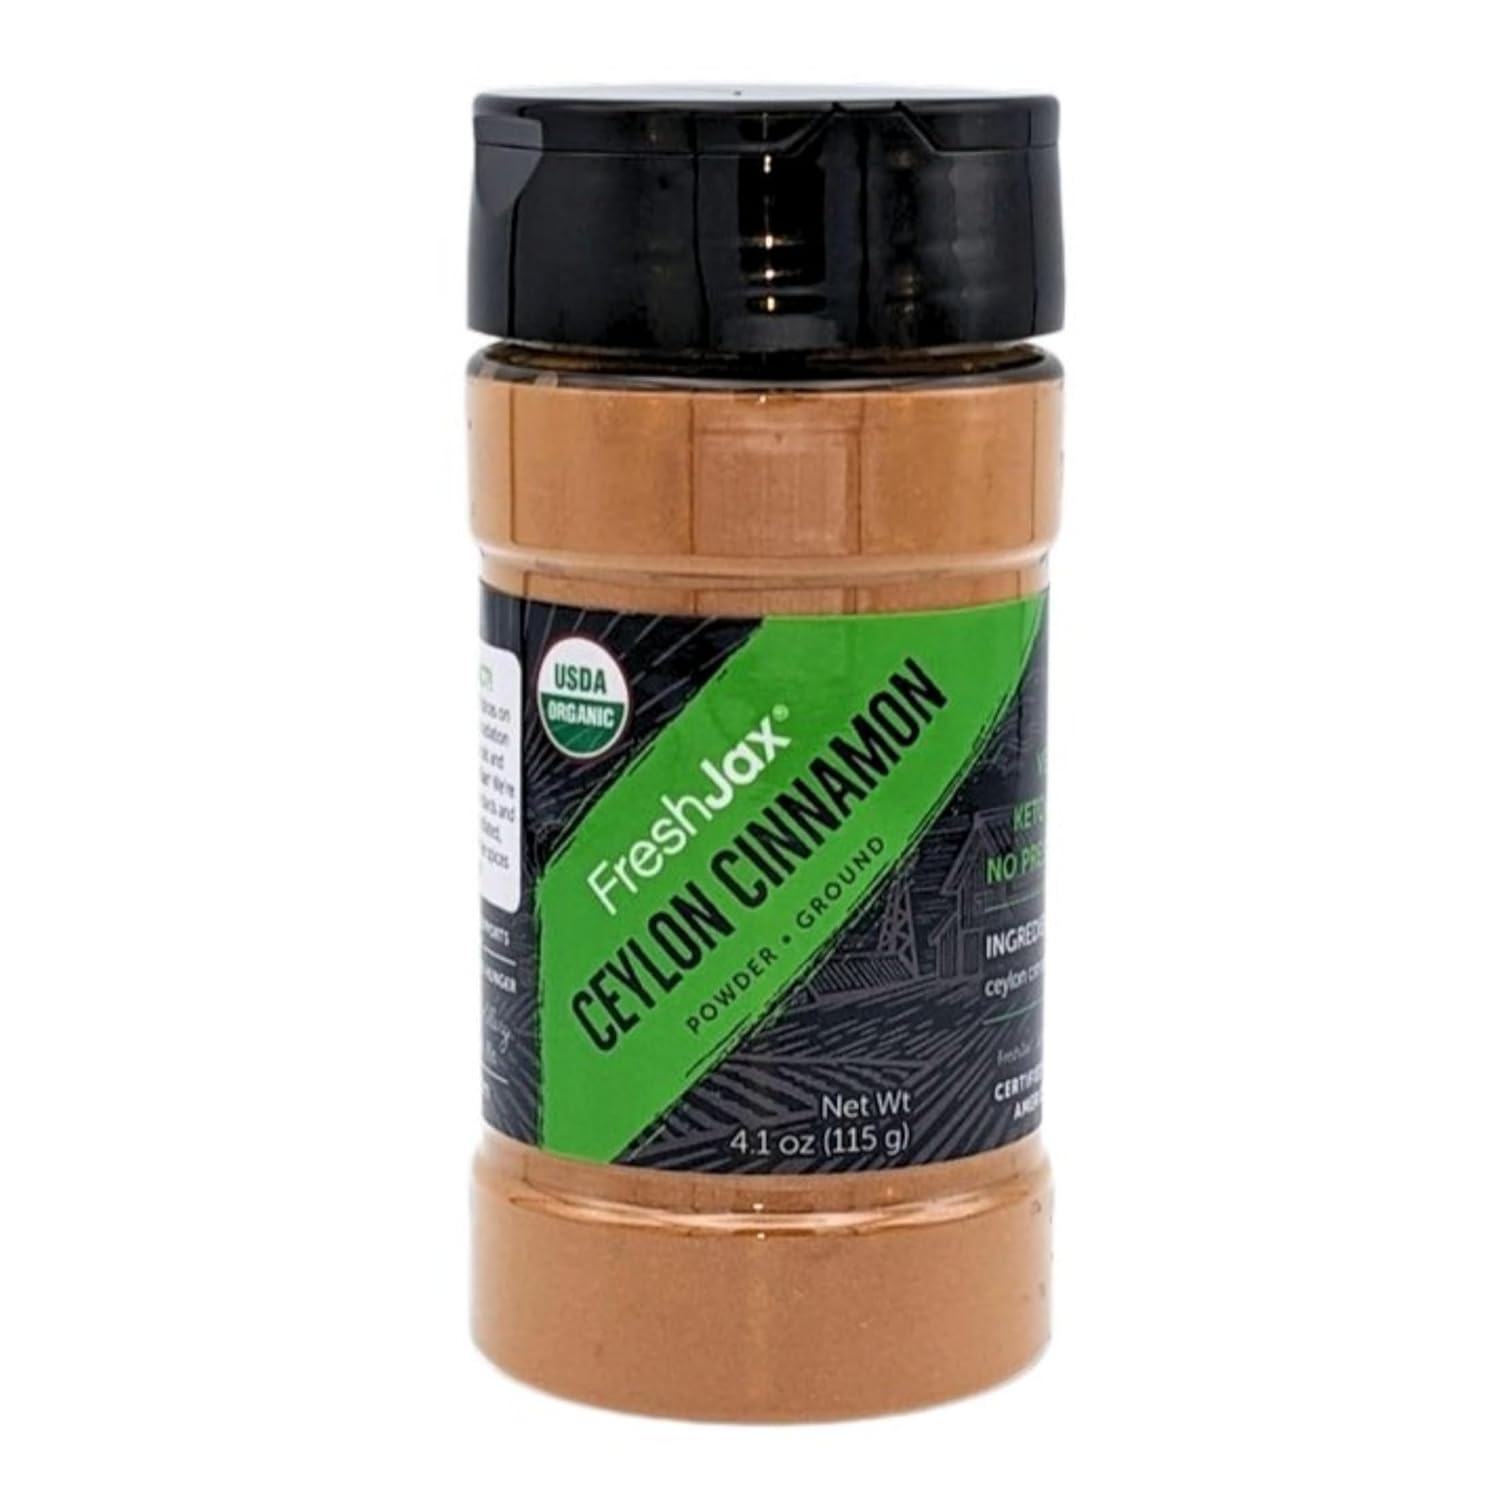 FreshJax Organic Ceylon Cinnamon Powder (4.1 oz Bottle) Non GMO, Gluten Free, Keto, Paleo, No Preservatives True Raw Cinnamon Ceylon Powder | Handcrafted in Jacksonville, Florida